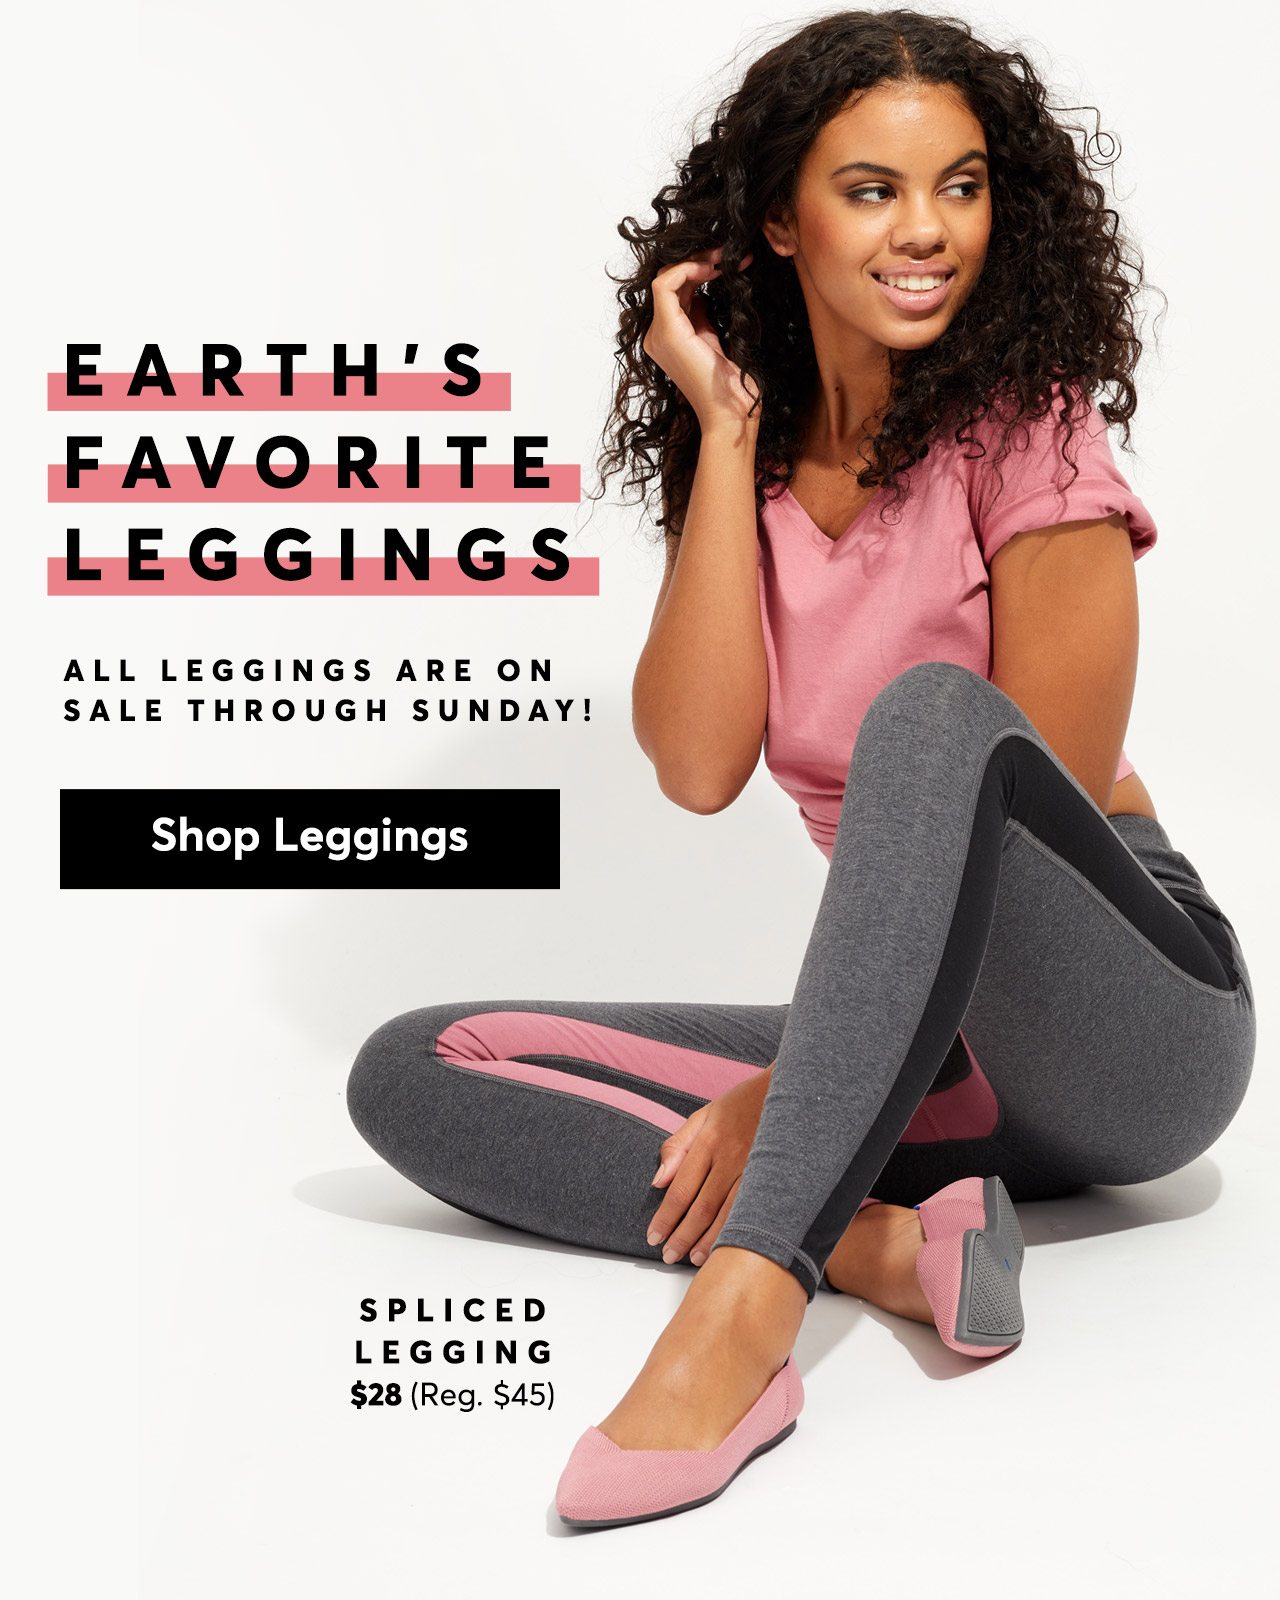 Earth's Favorites Leggings are on Sale Through Sunday. Shop Leggings.